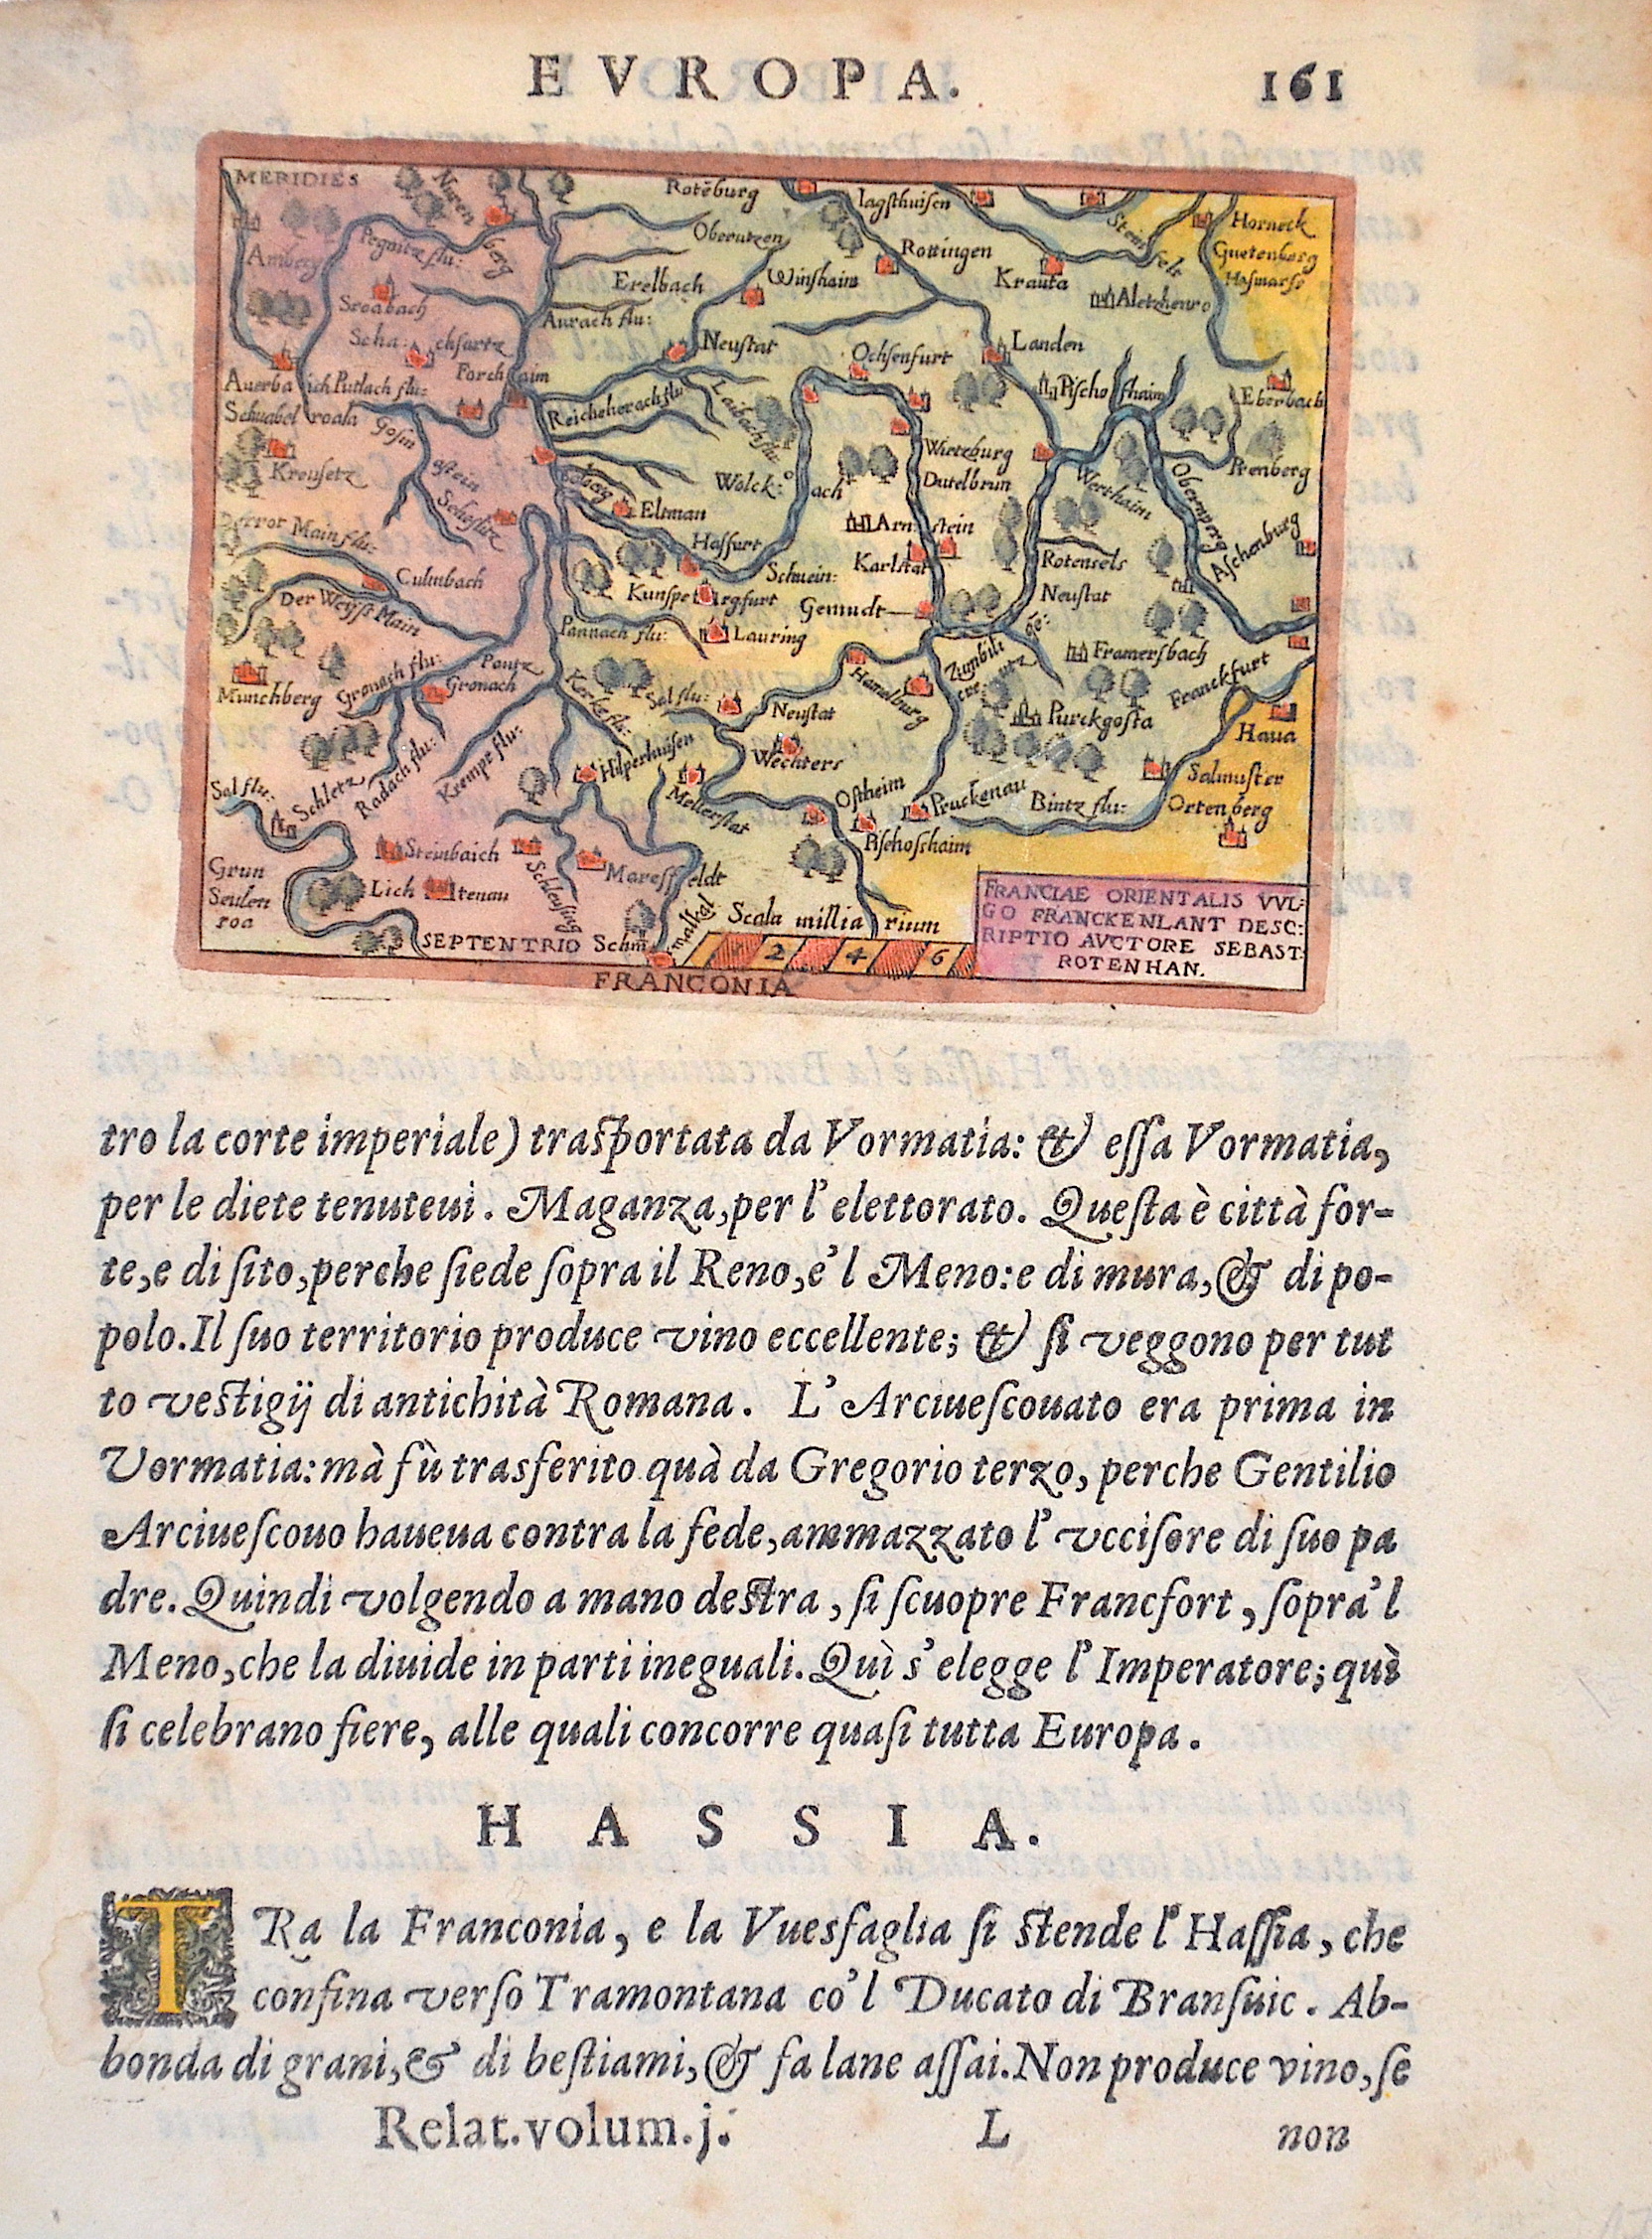 Anonymus  Franconia / Franciae Orientalis Vulgo Franckenlant descriptio Auctore Sebast. Rotenhan.